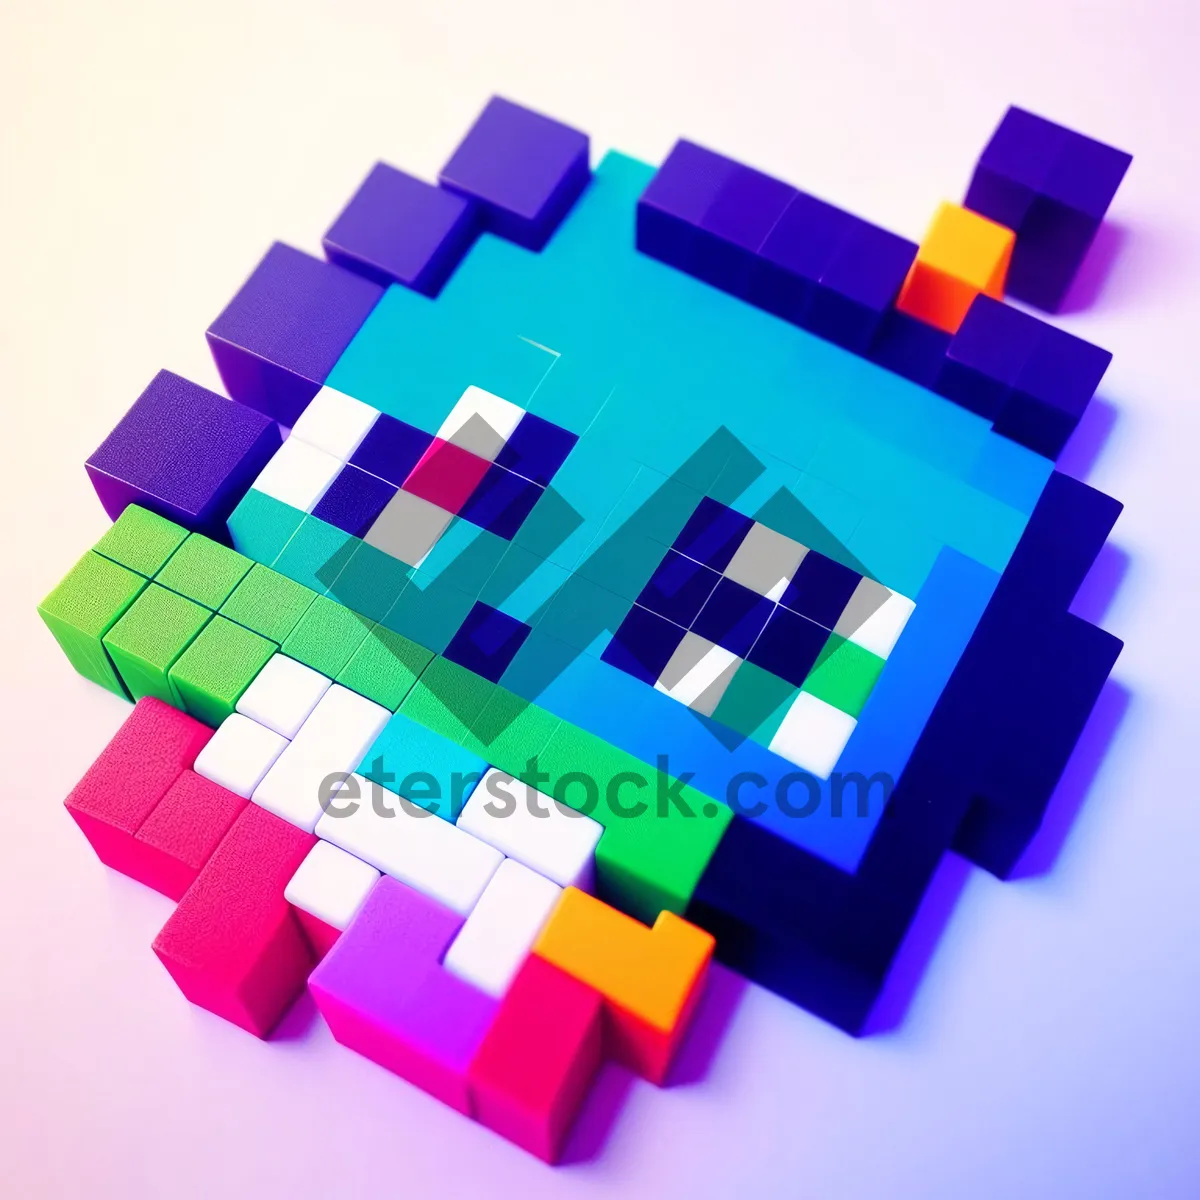 Picture of Pixel Mine: 3D Toy Excavation Cube Blocks